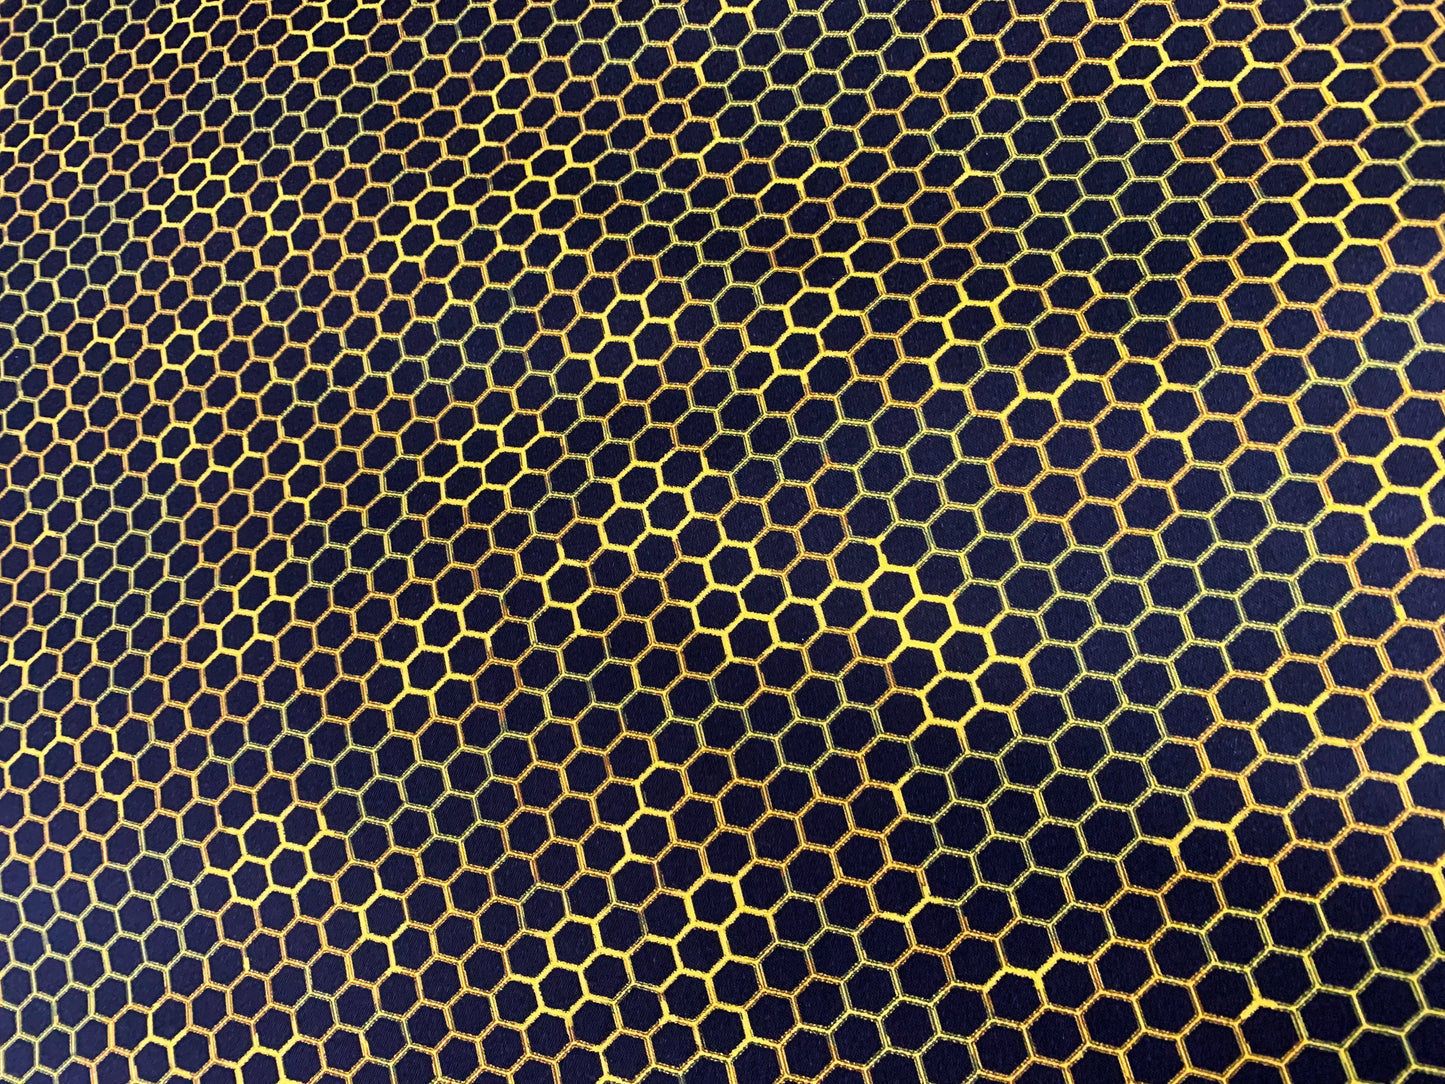 Honeycomb Bee fabric CD1360 Bumble bee fabric Honeycomb fabric